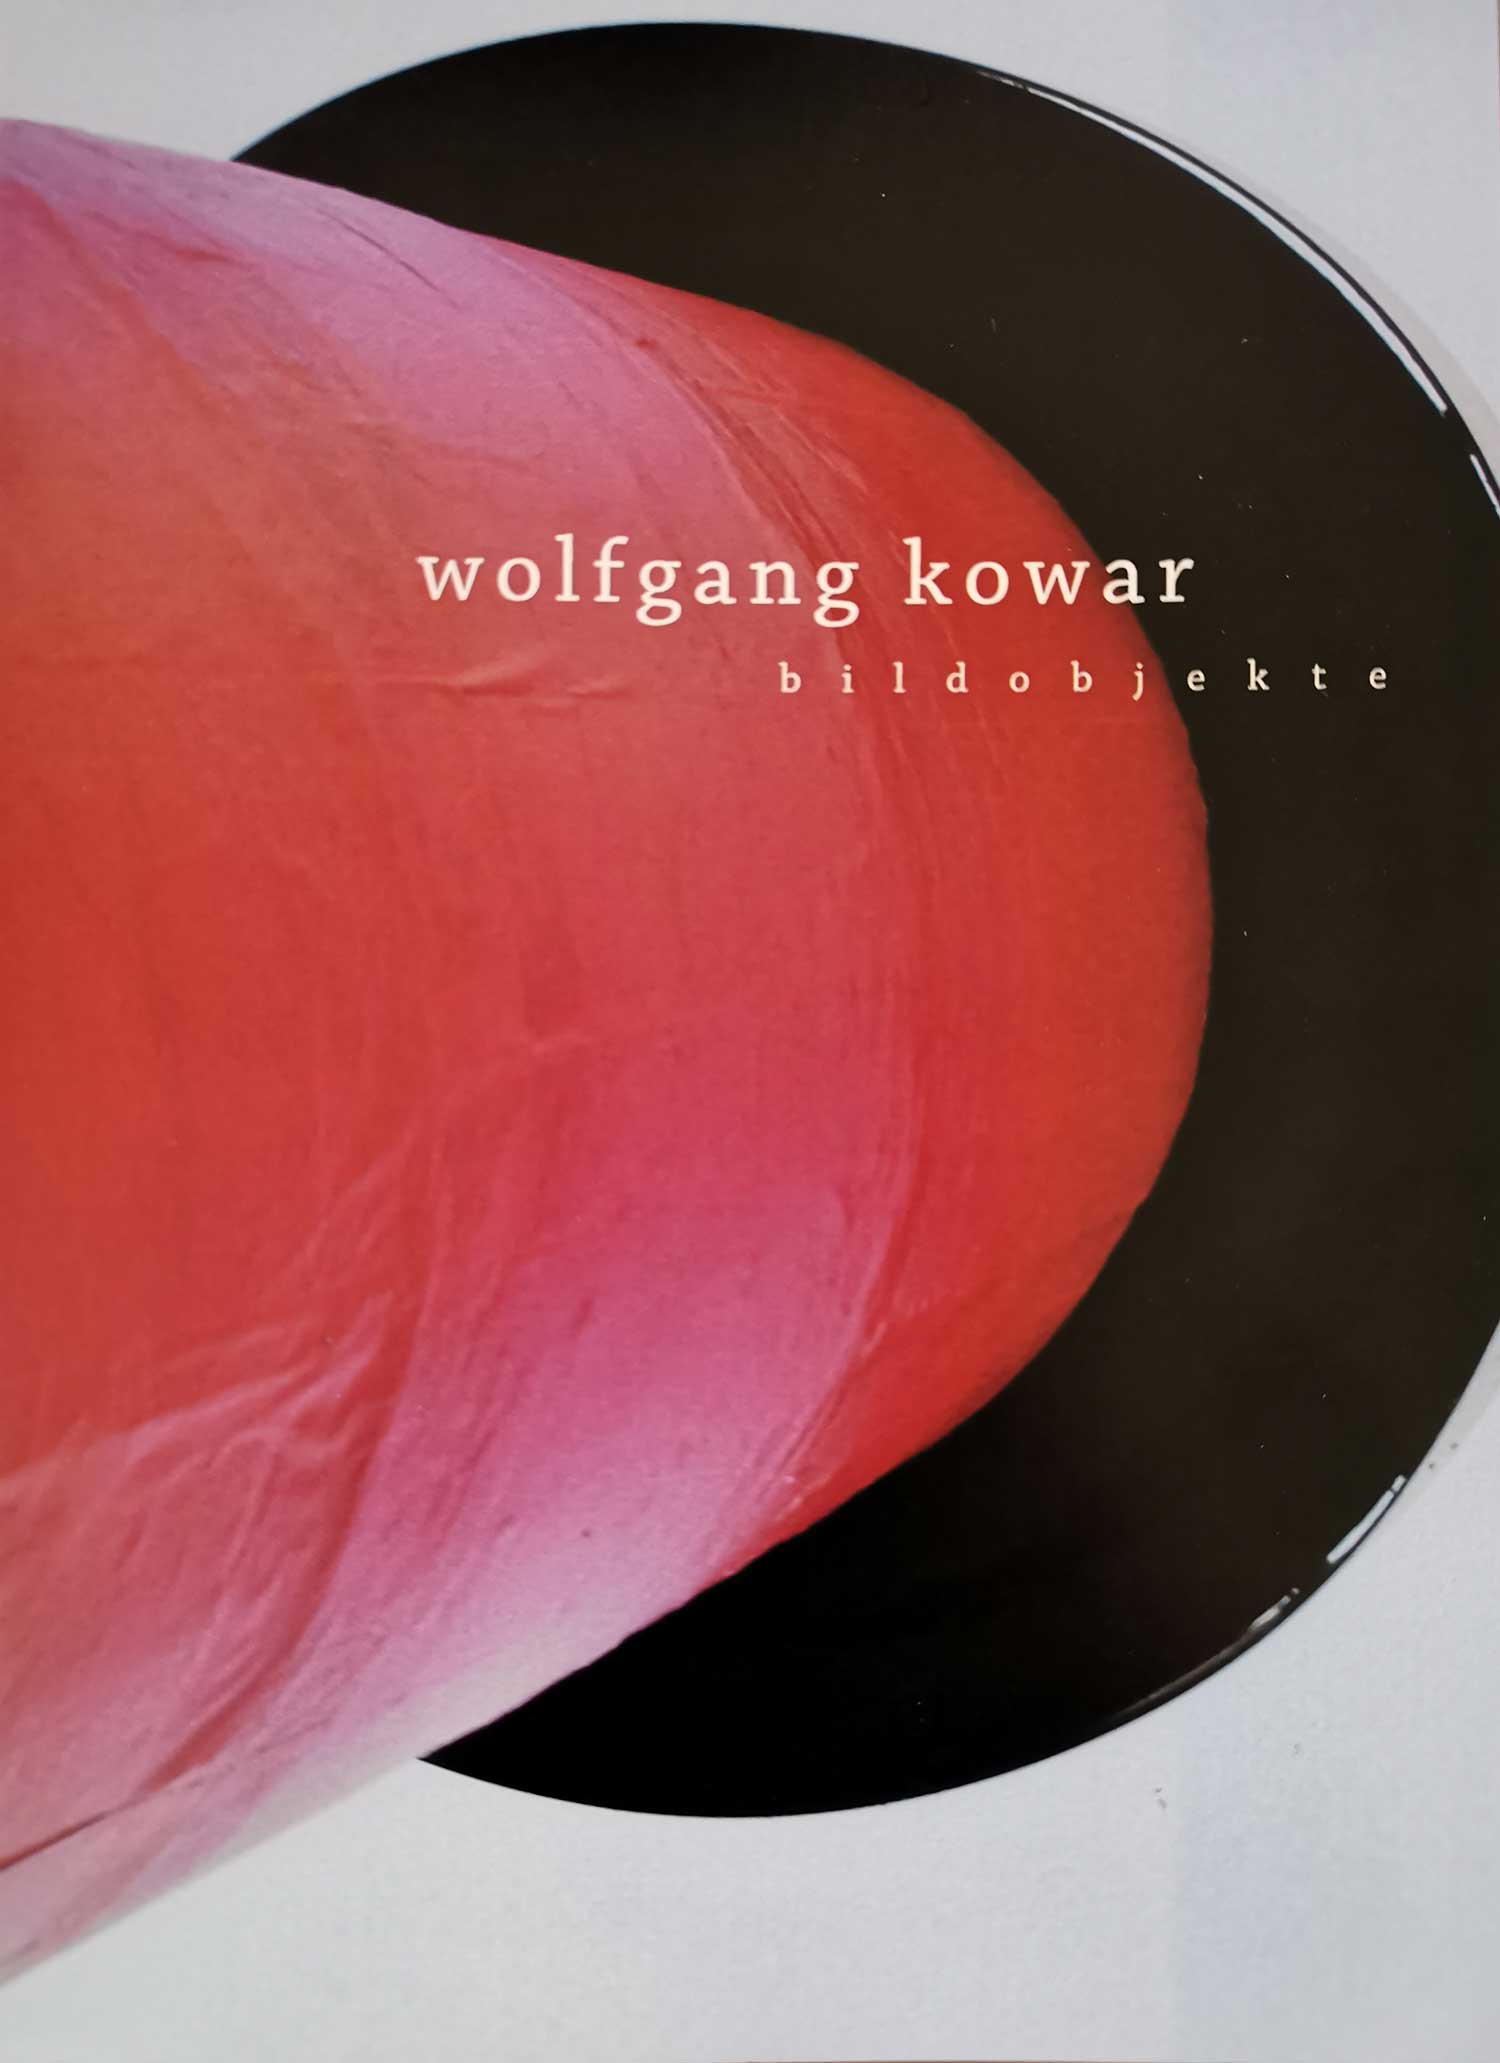 Katalog Wolfgang Kowar bildobjekte